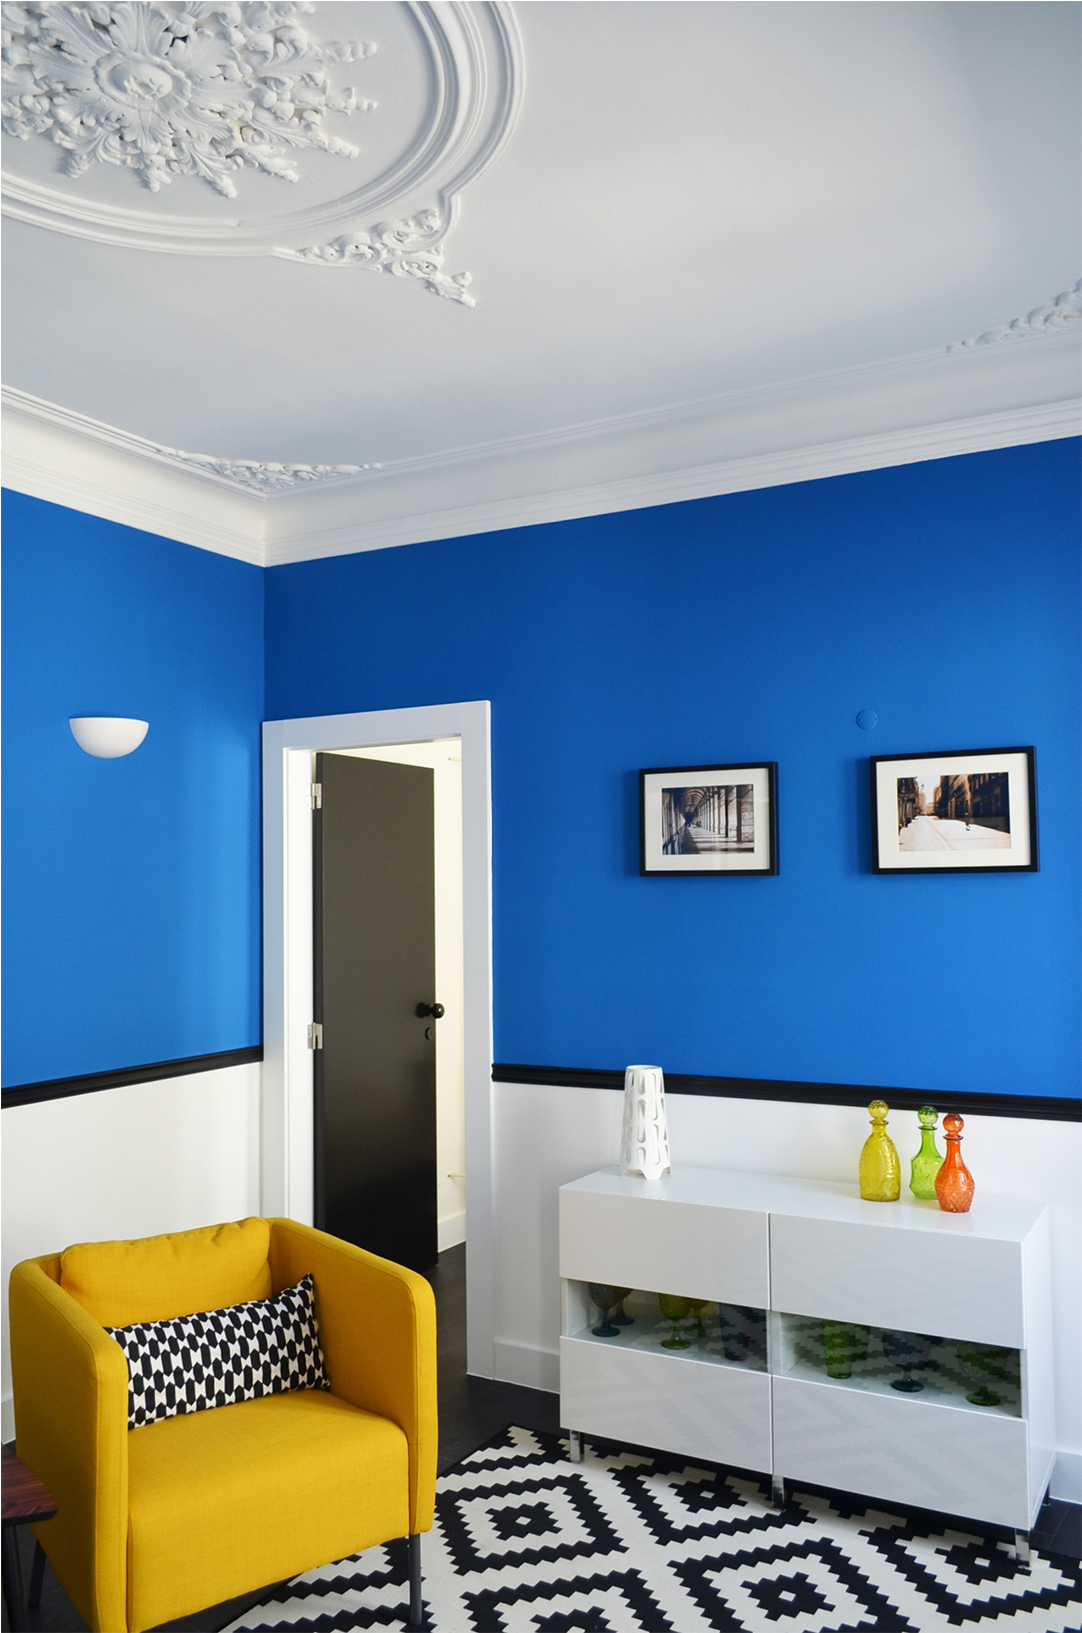 Casa Azul - Interior Design (2464x1632)